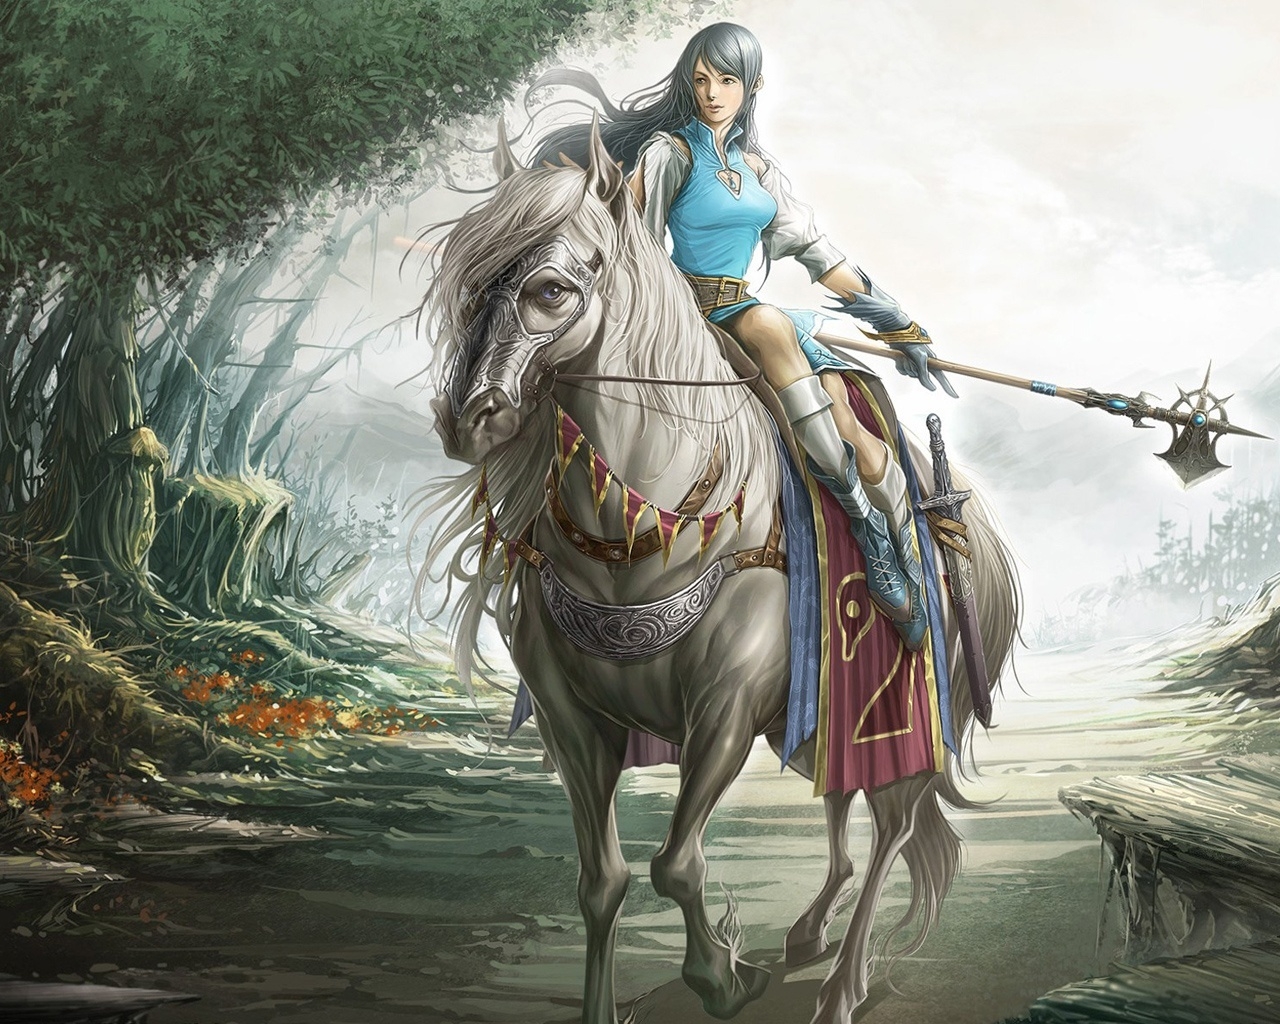 Fantasy Girl Rider for 1280 x 1024 resolution